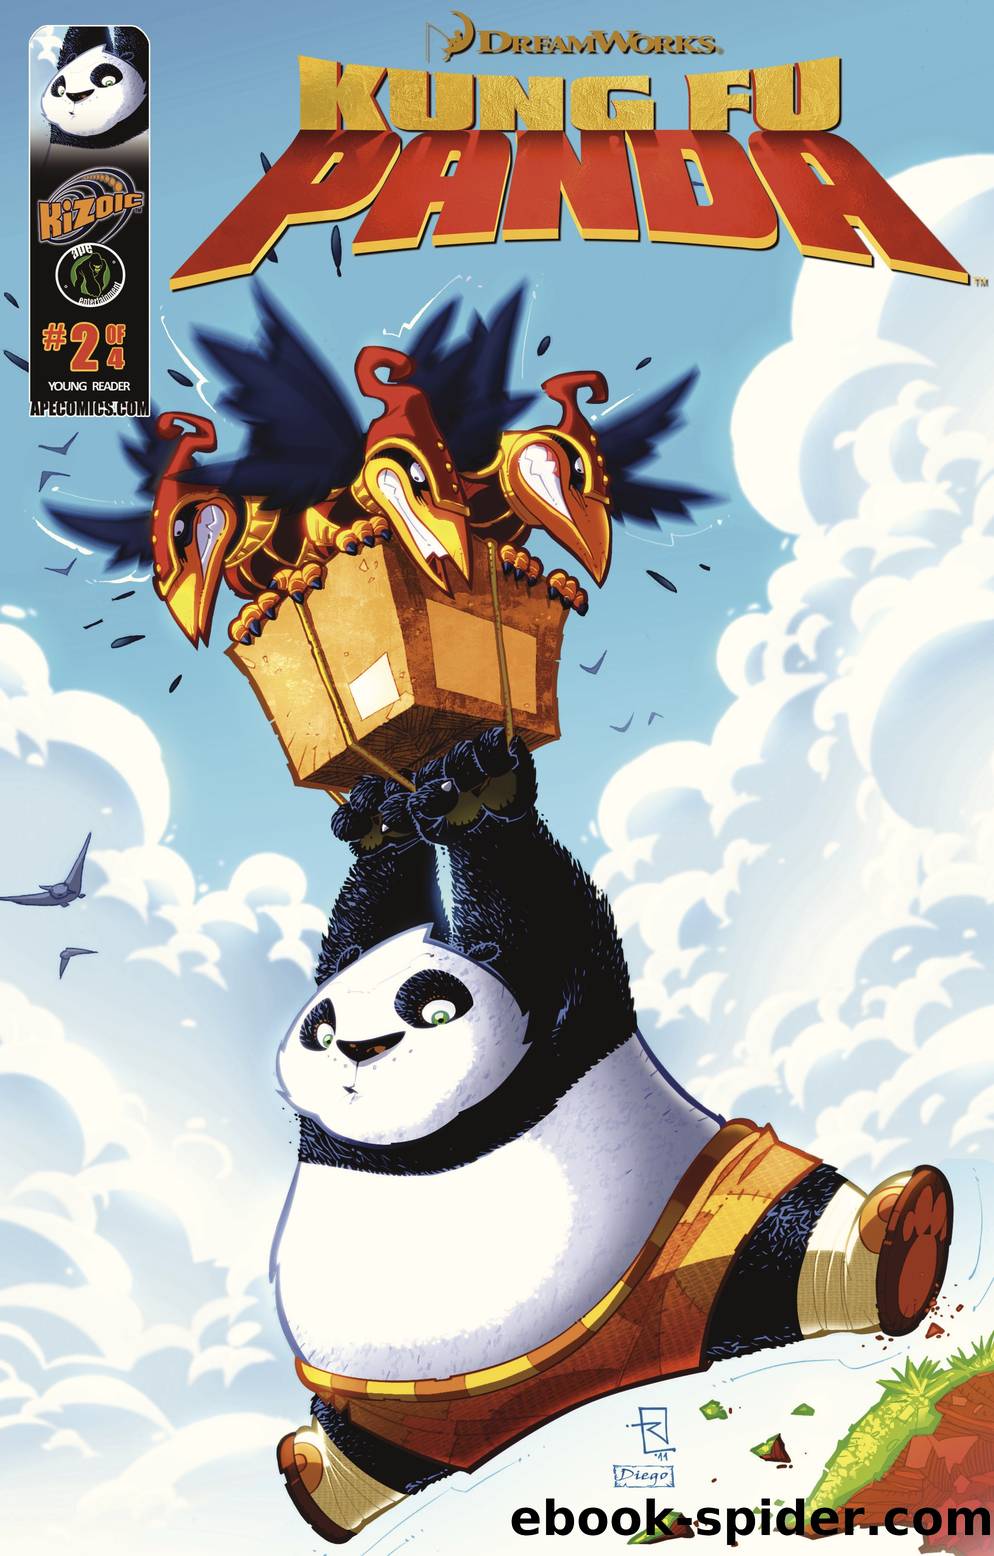 Kung Fu Panda, Volume 1, Issue 2 by Matt Anderson